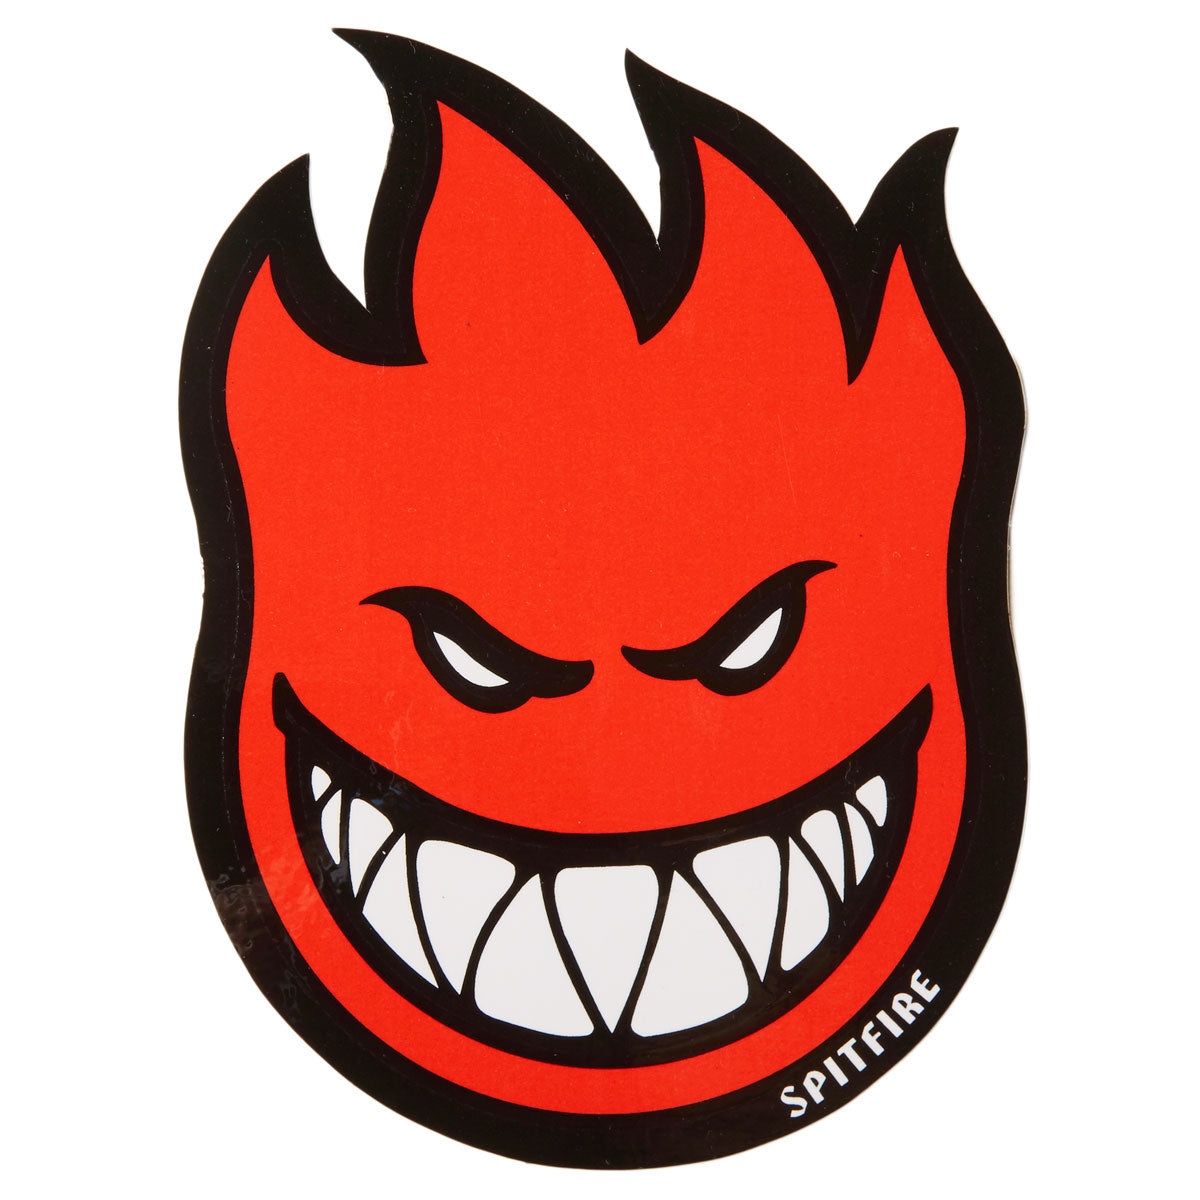 Spitfire Fireball Bighead MD Stickers - Red image 1